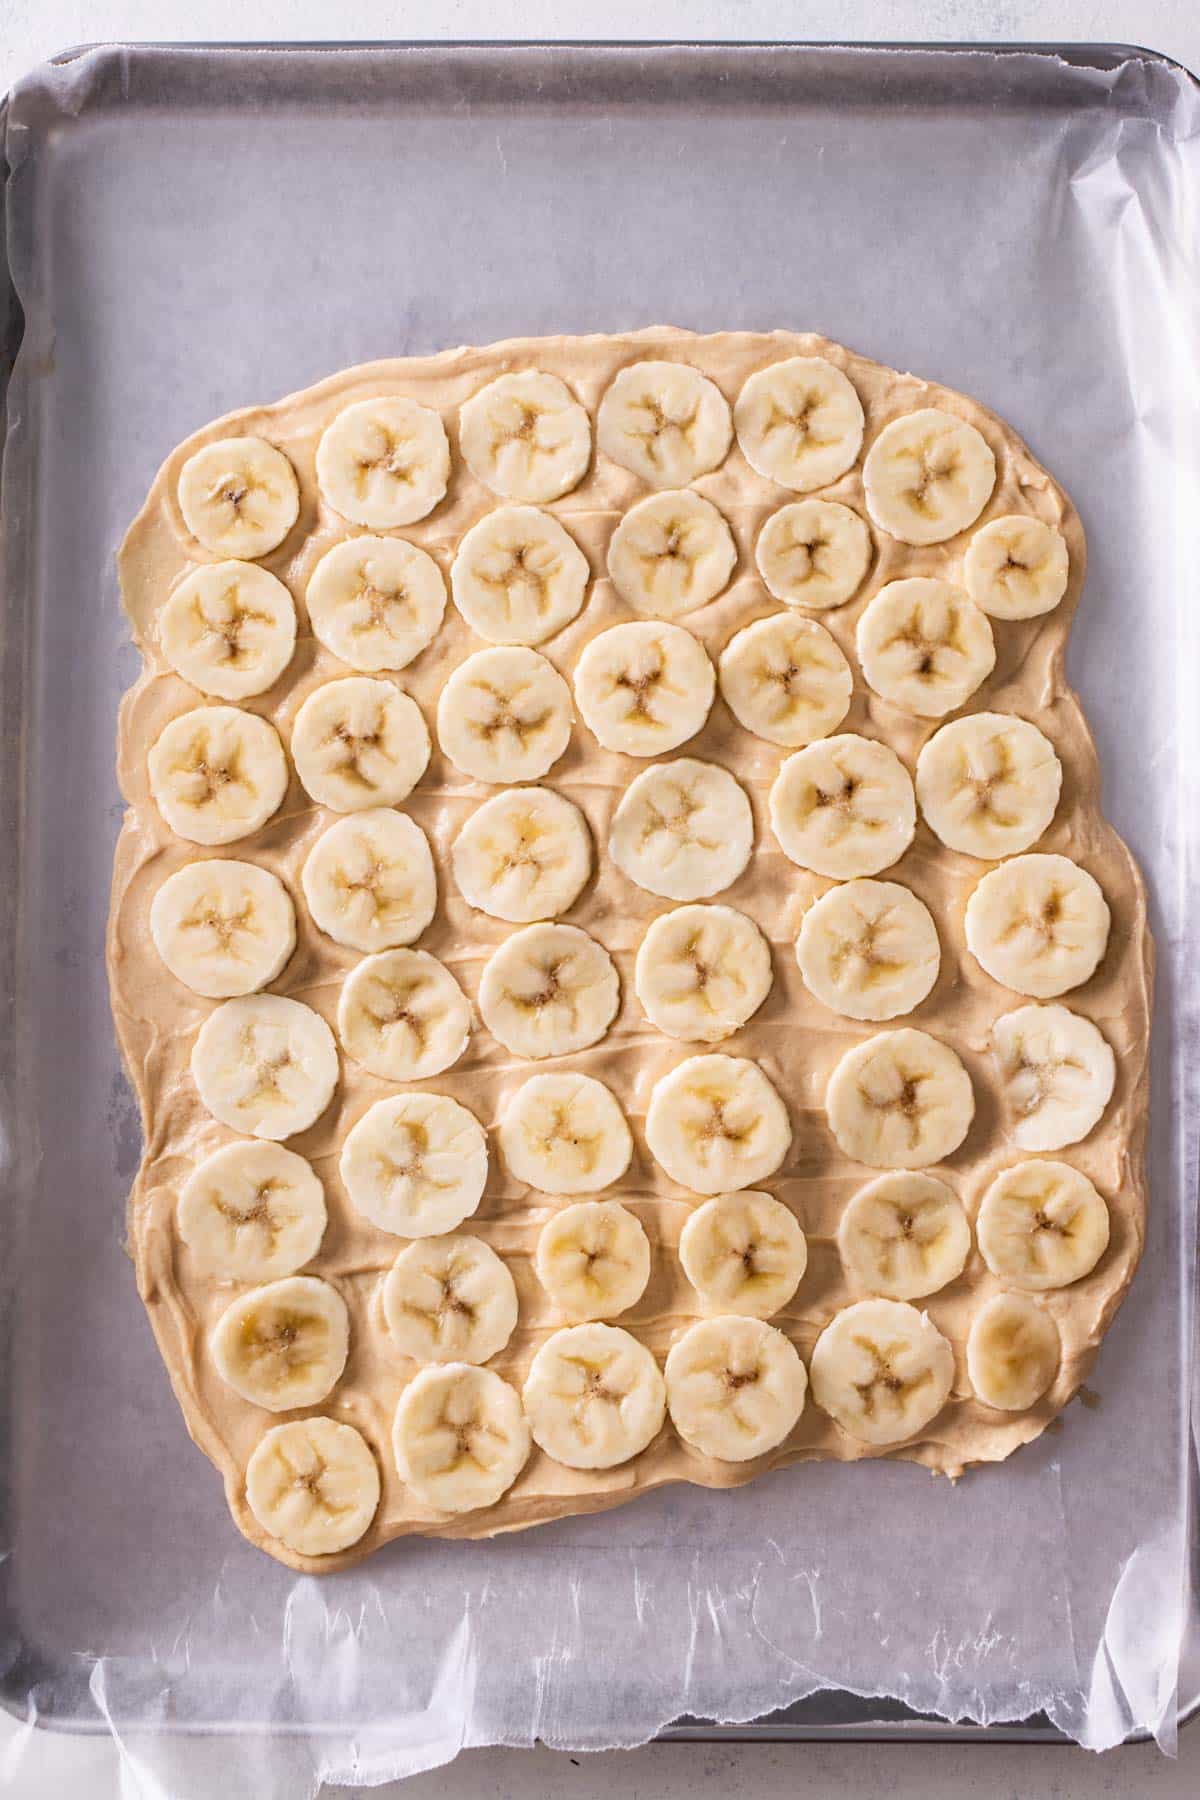 Bananas are spread across peanut butter-flavored yogurt.